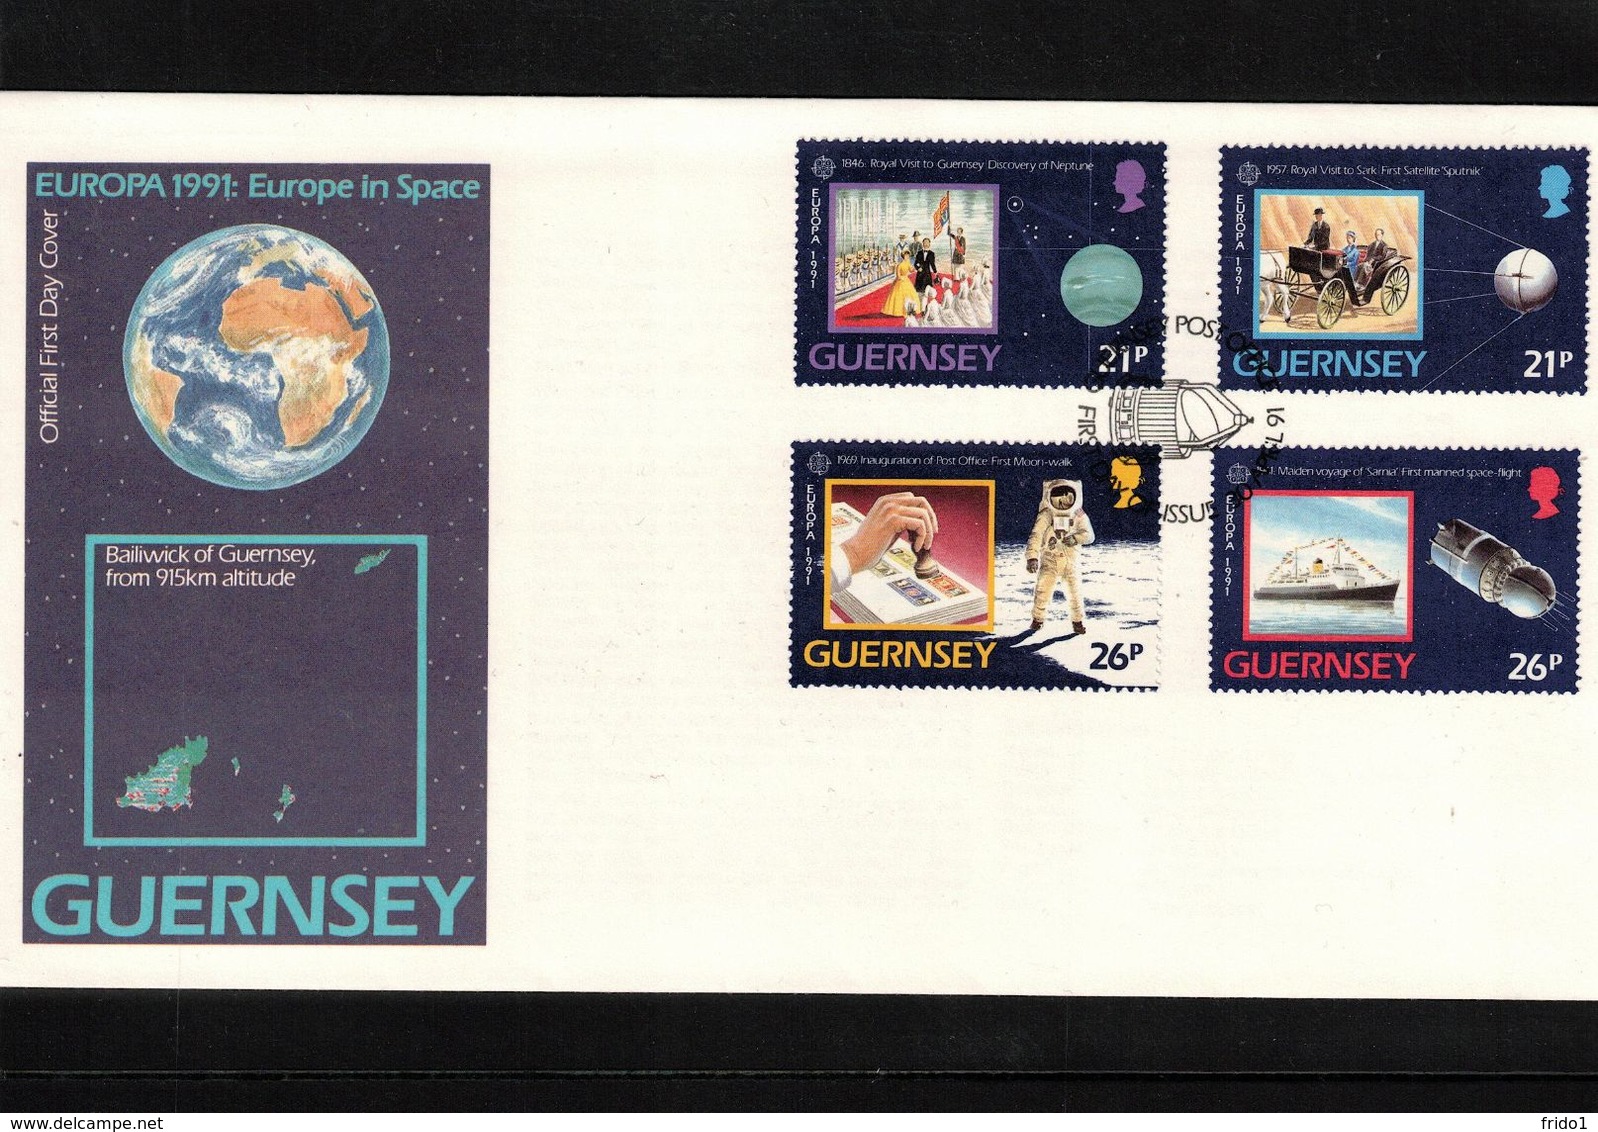 Guernsey 1991 Space / Raumfahrt Europa Cept FDC - Europe